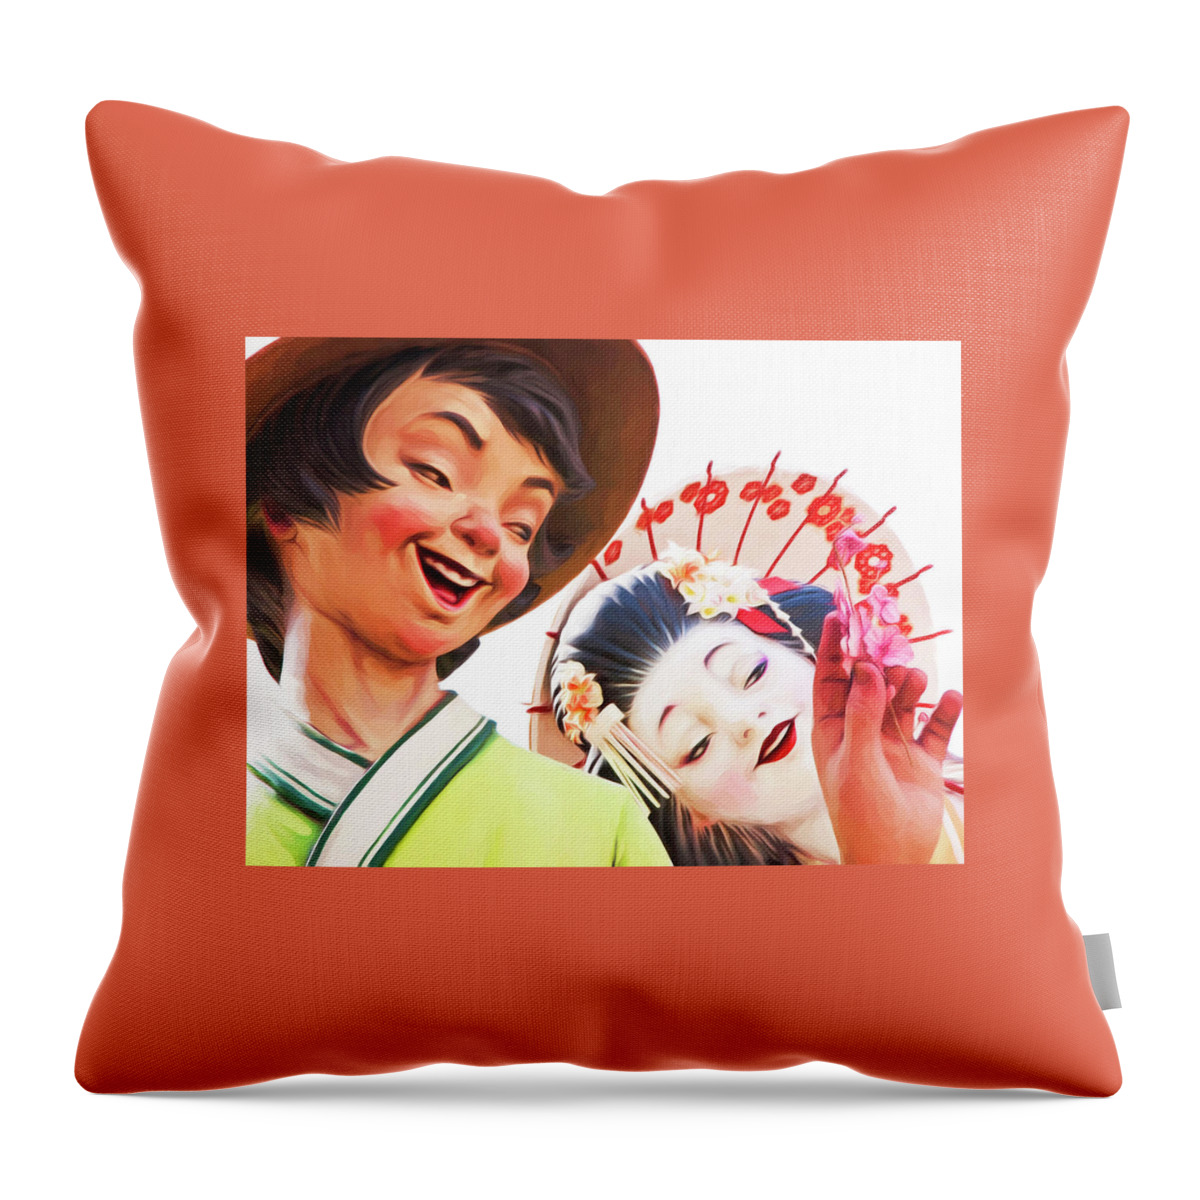 Japan Throw Pillow featuring the digital art Japan Love by Dennis Cox